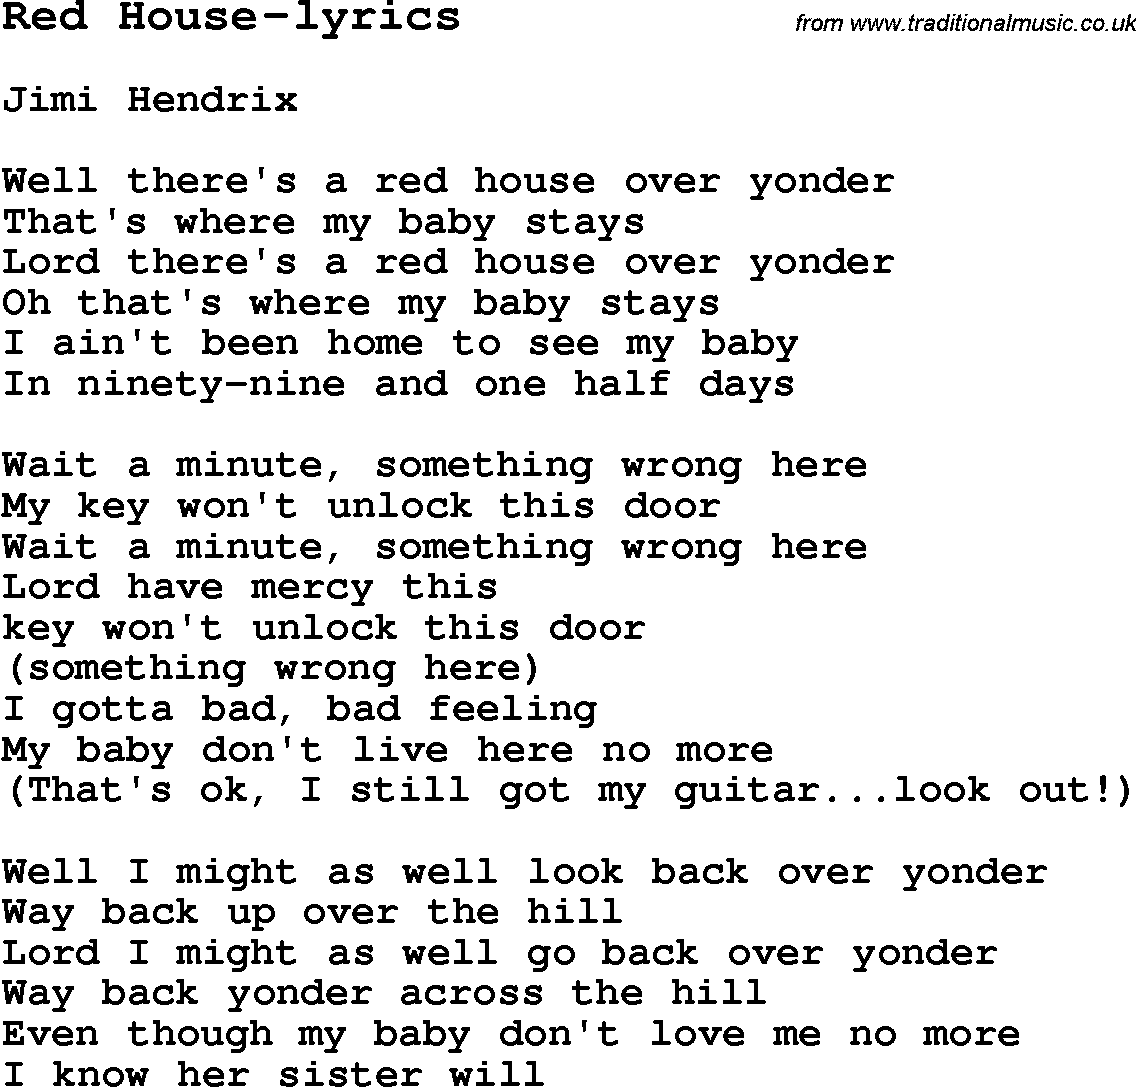 Blues Guitar for Red House-lyrics, with Chords, Lyrics